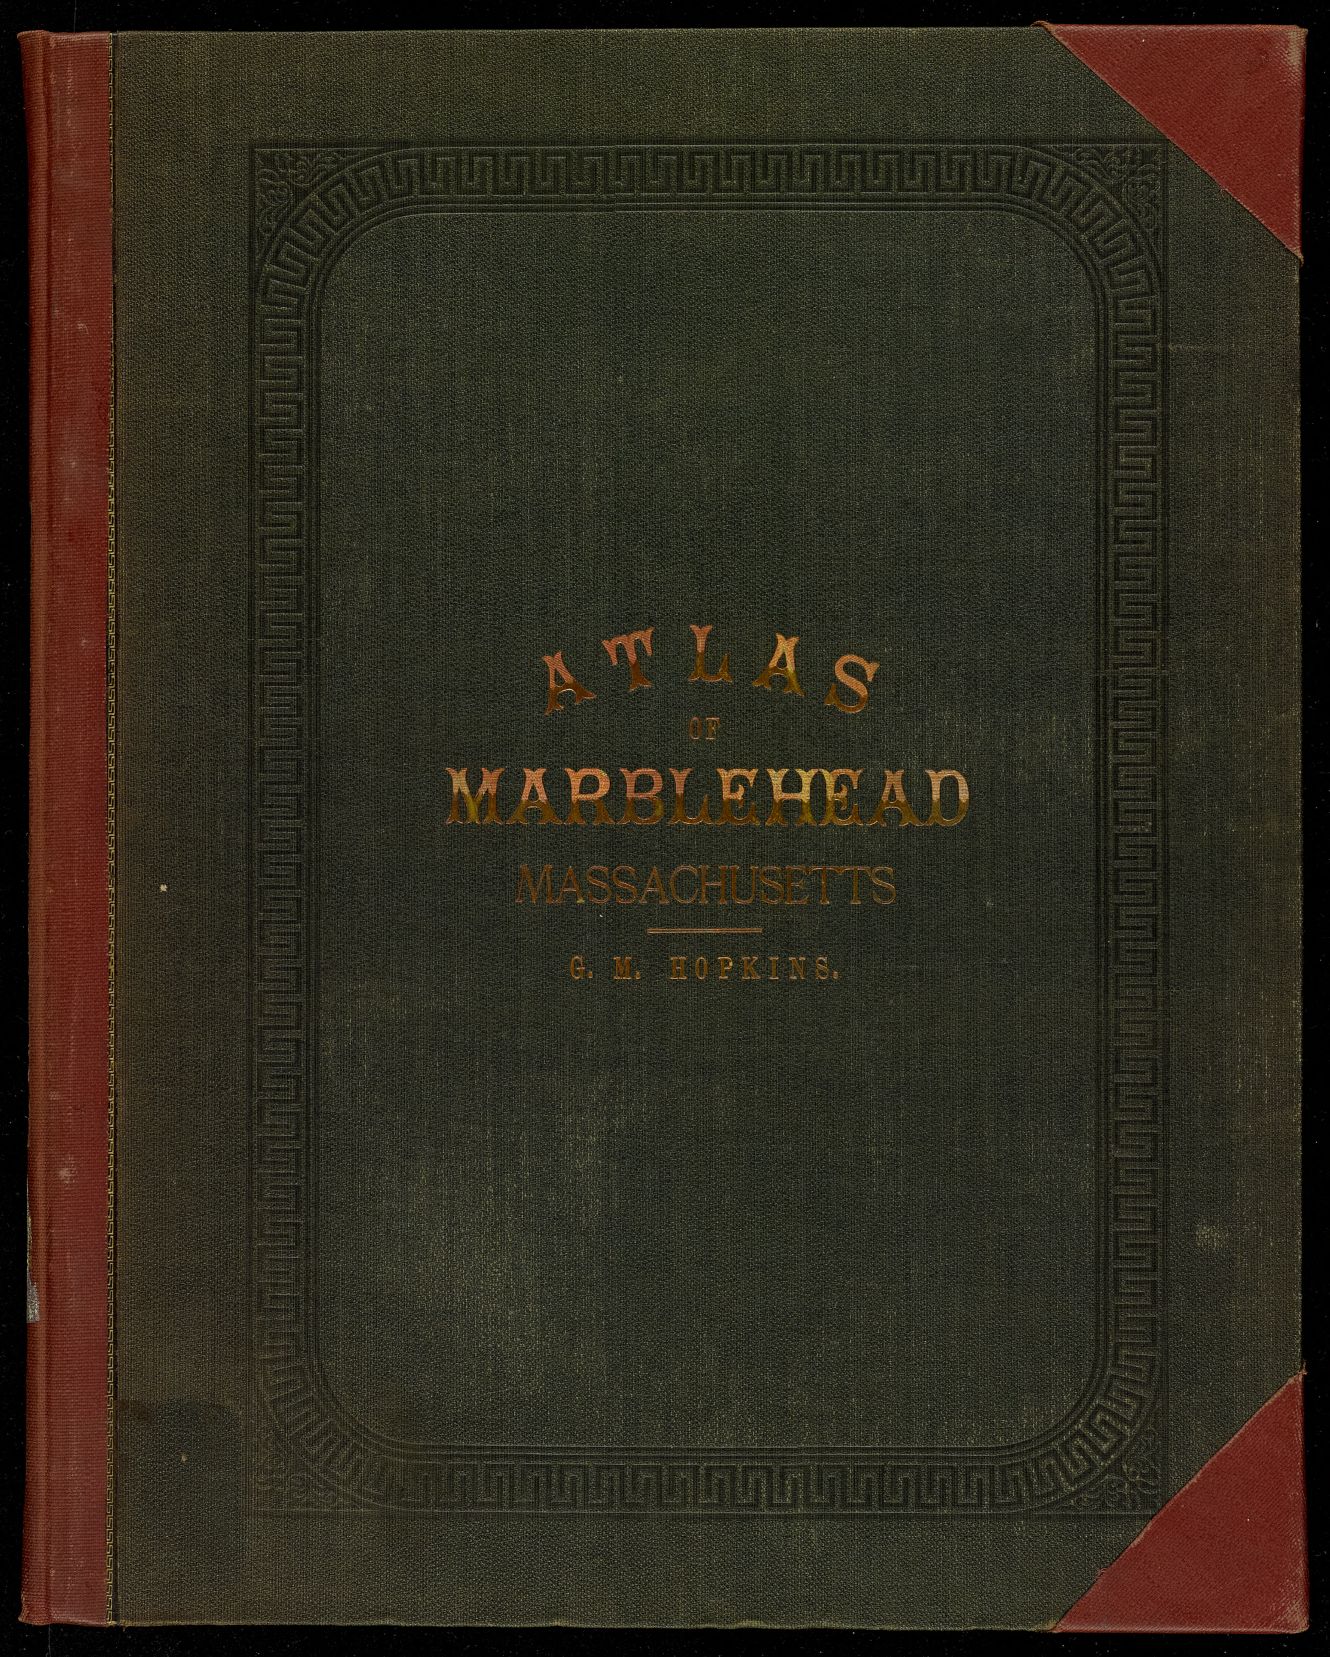 Atlas of Marblehead, Massachusetts